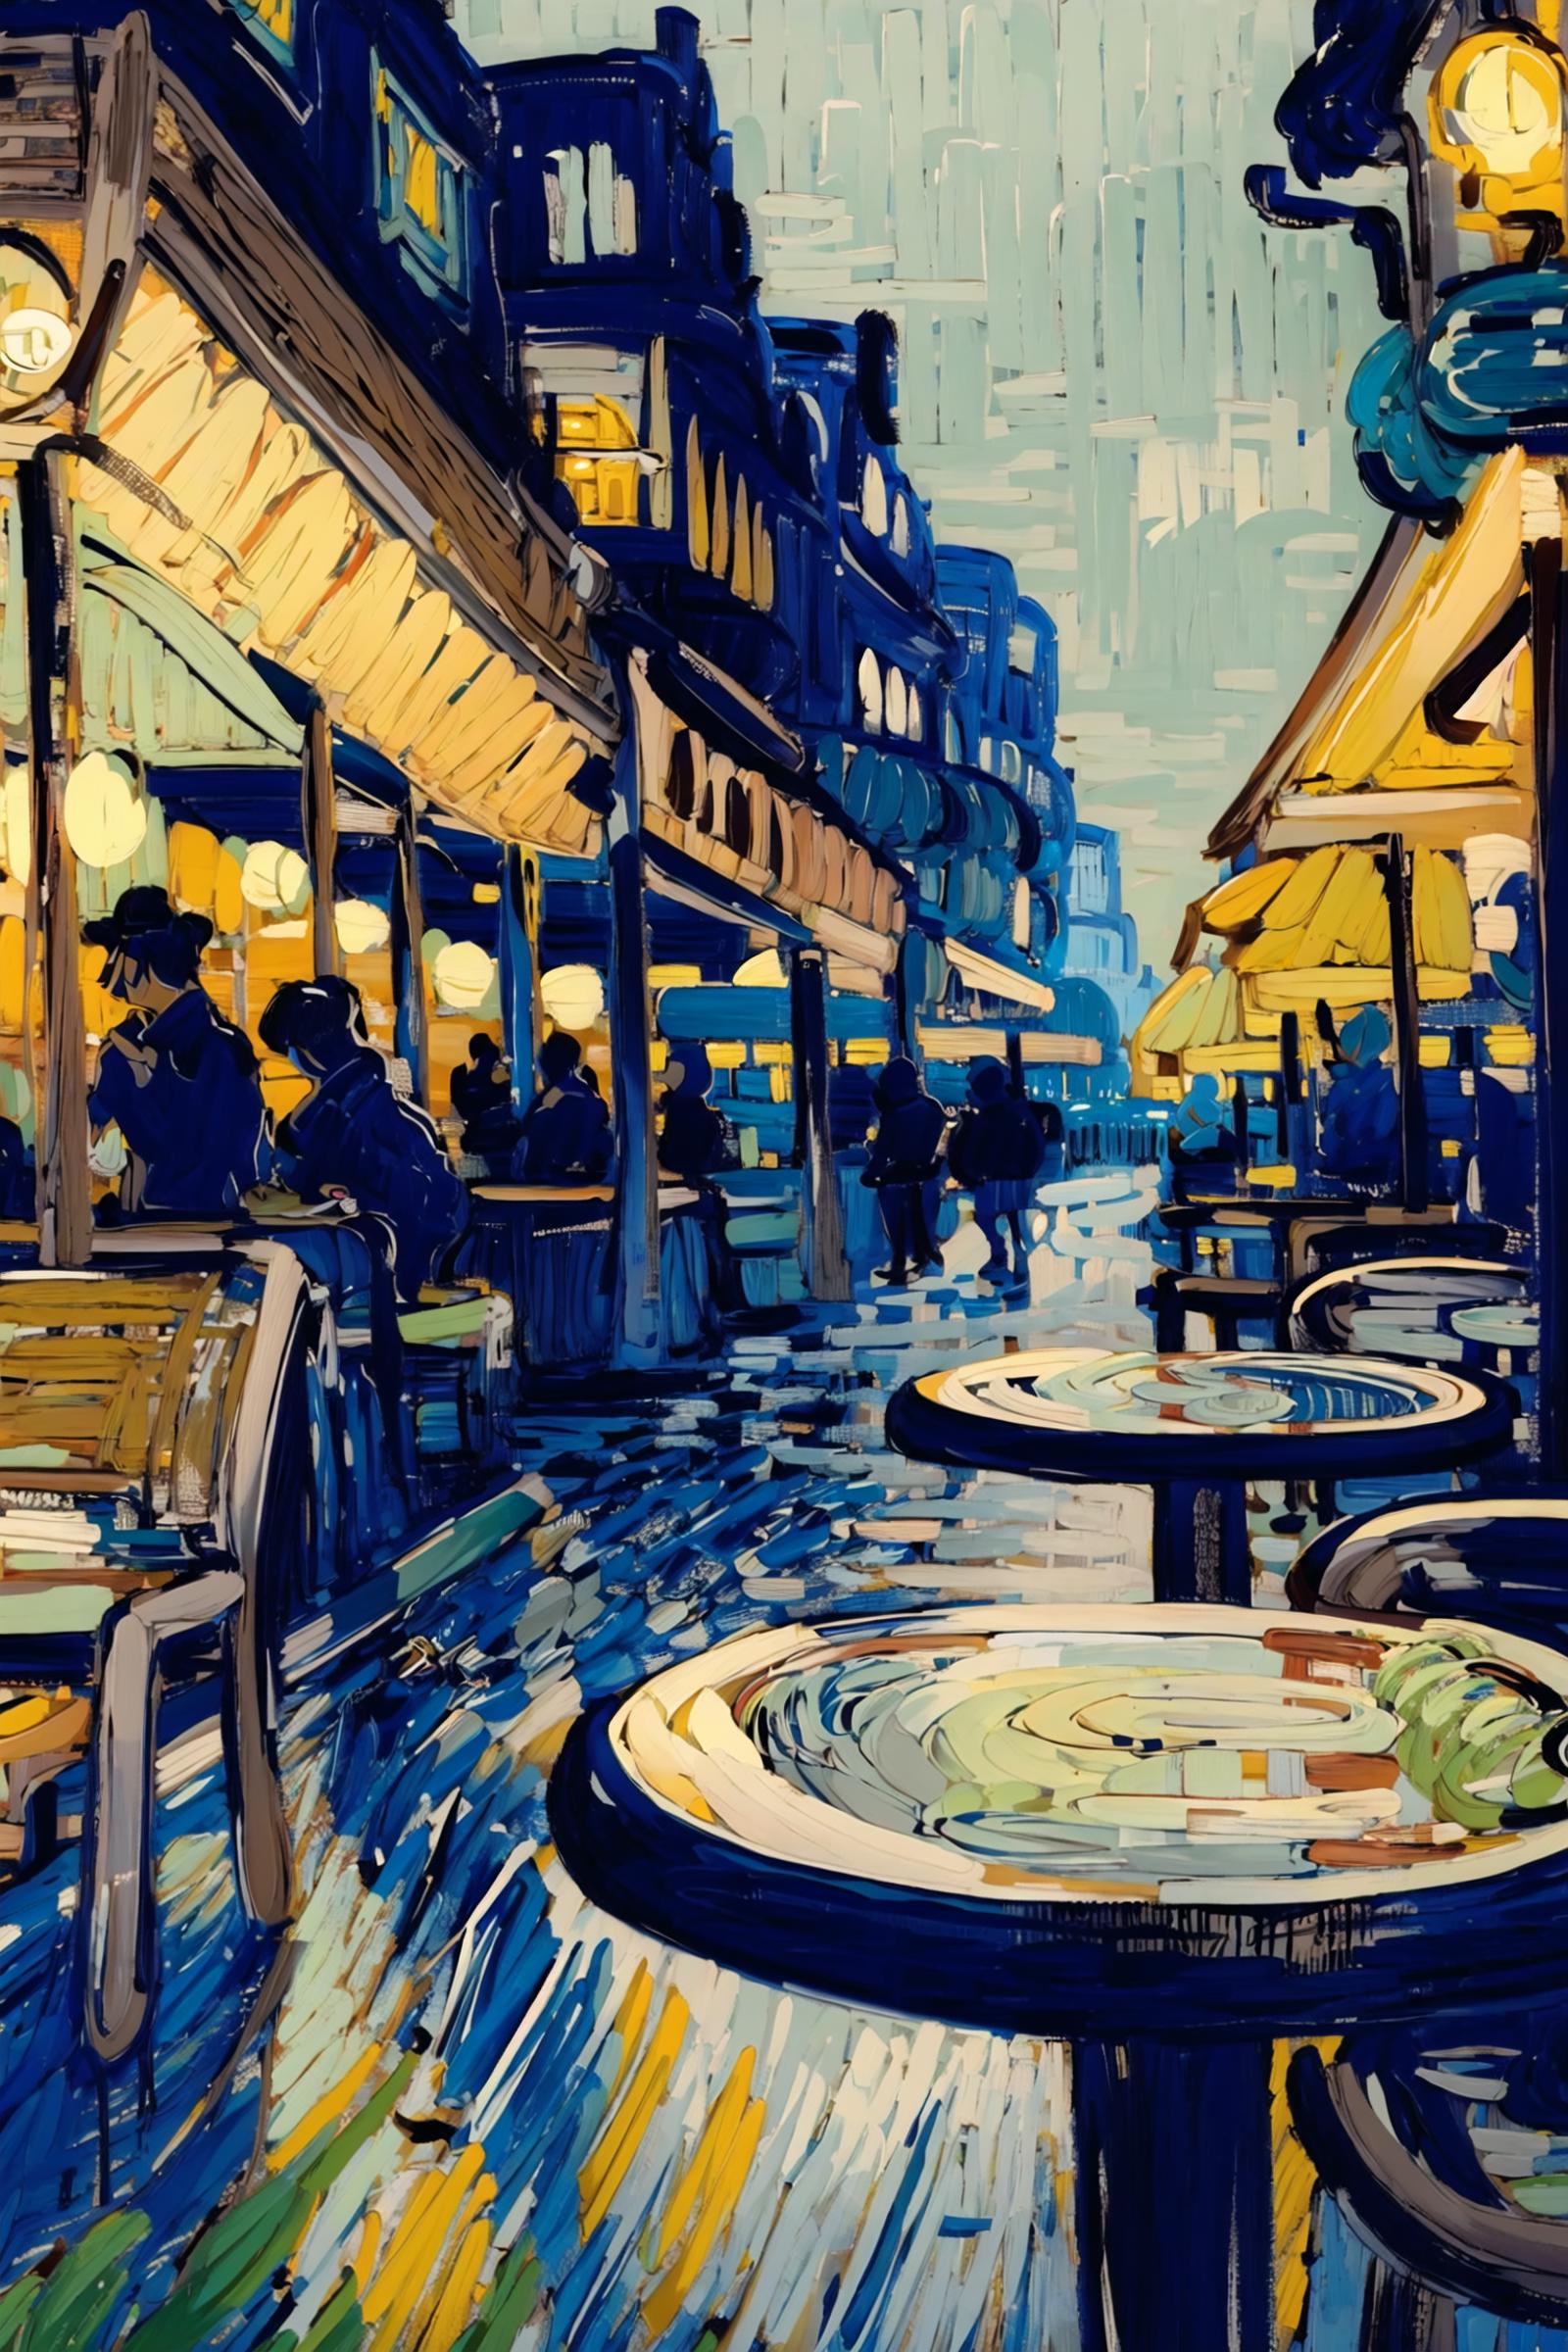 Van Gogh Style image by chaddd